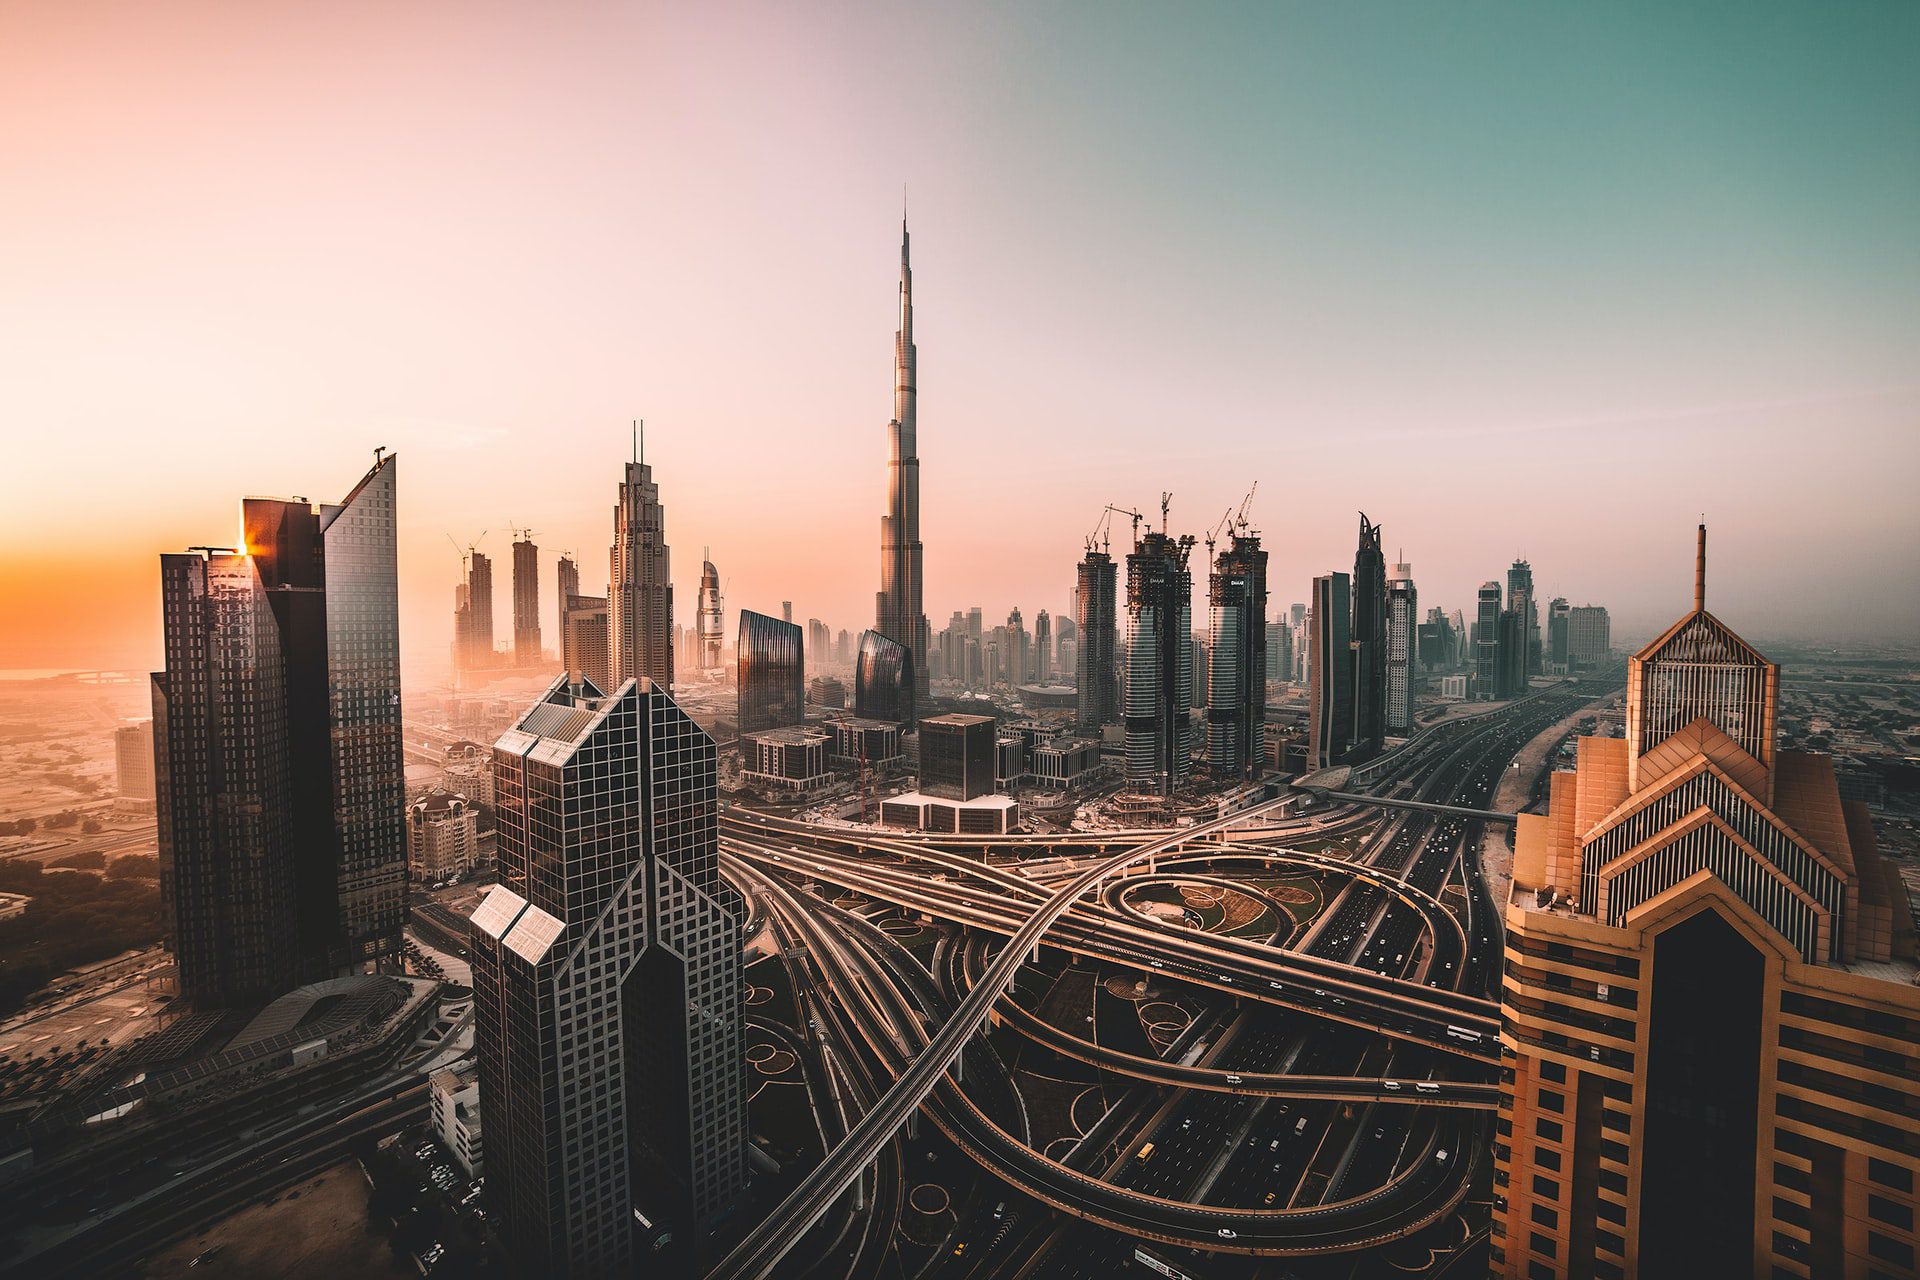 Octávio Capita no LinkedIn: Interessante texto sobre o Dubai